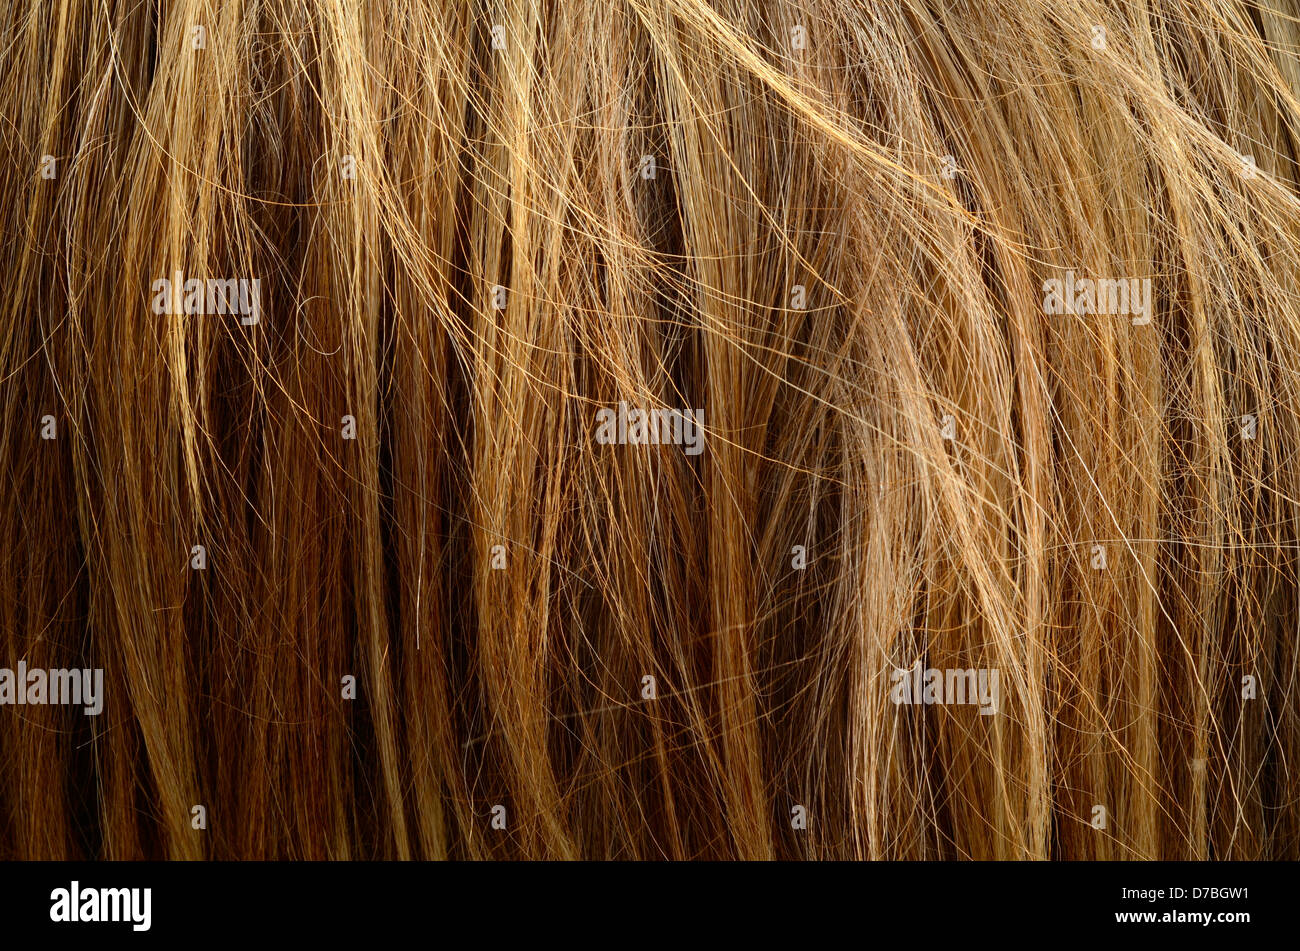 Texture Of Messy Animal Hair Stock Photo